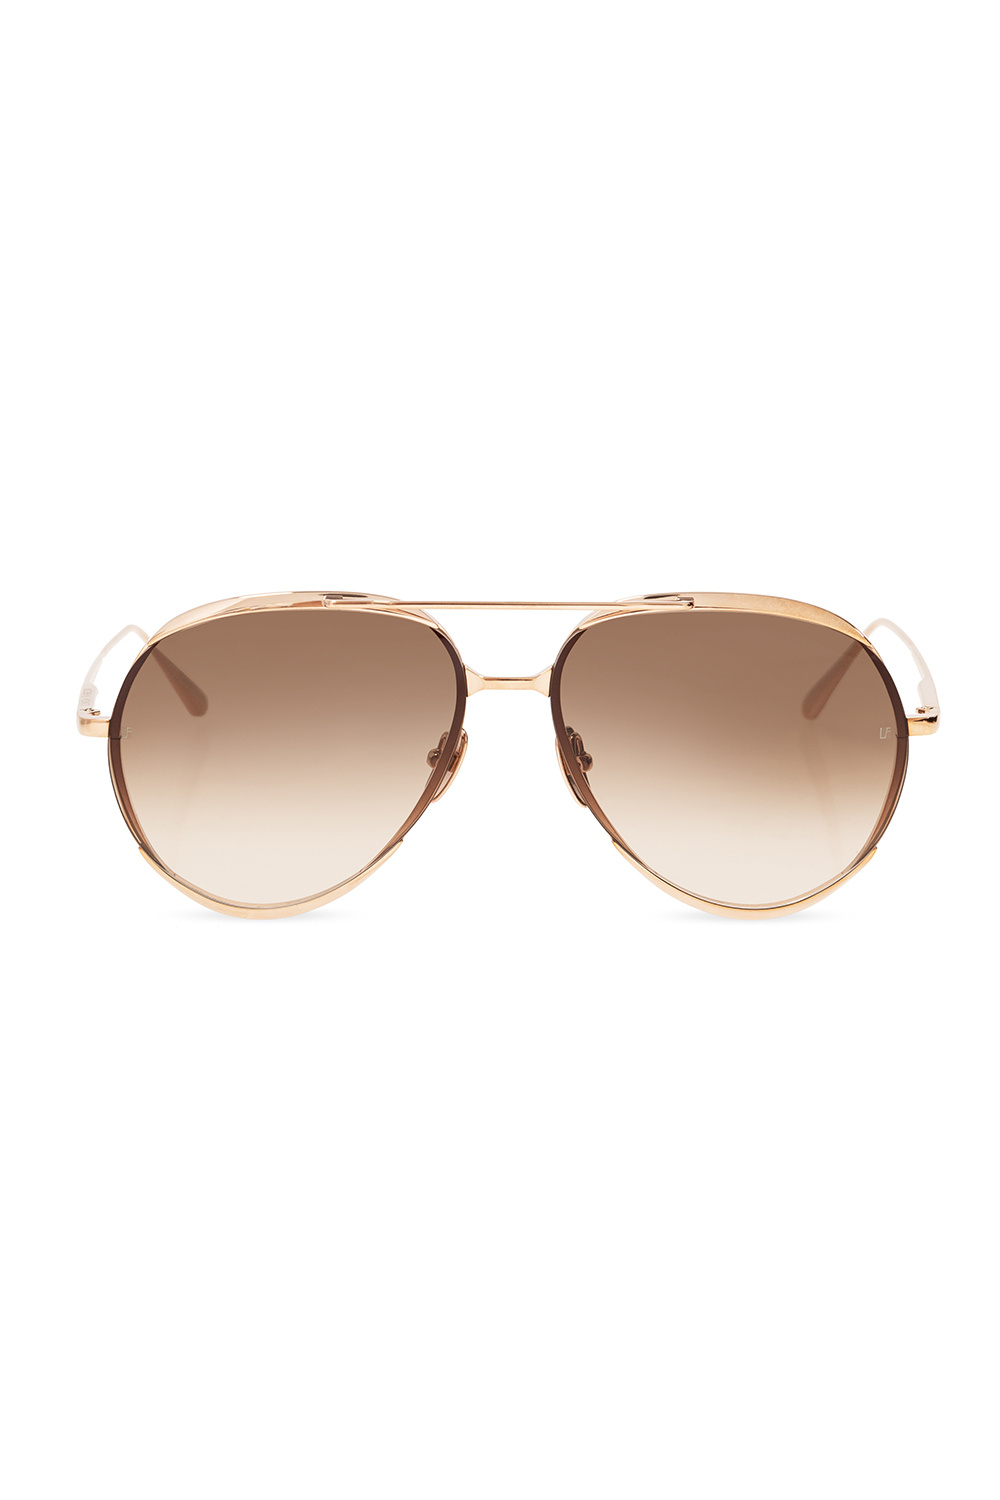 Linda Farrow ‘Matisse’ sunglasses